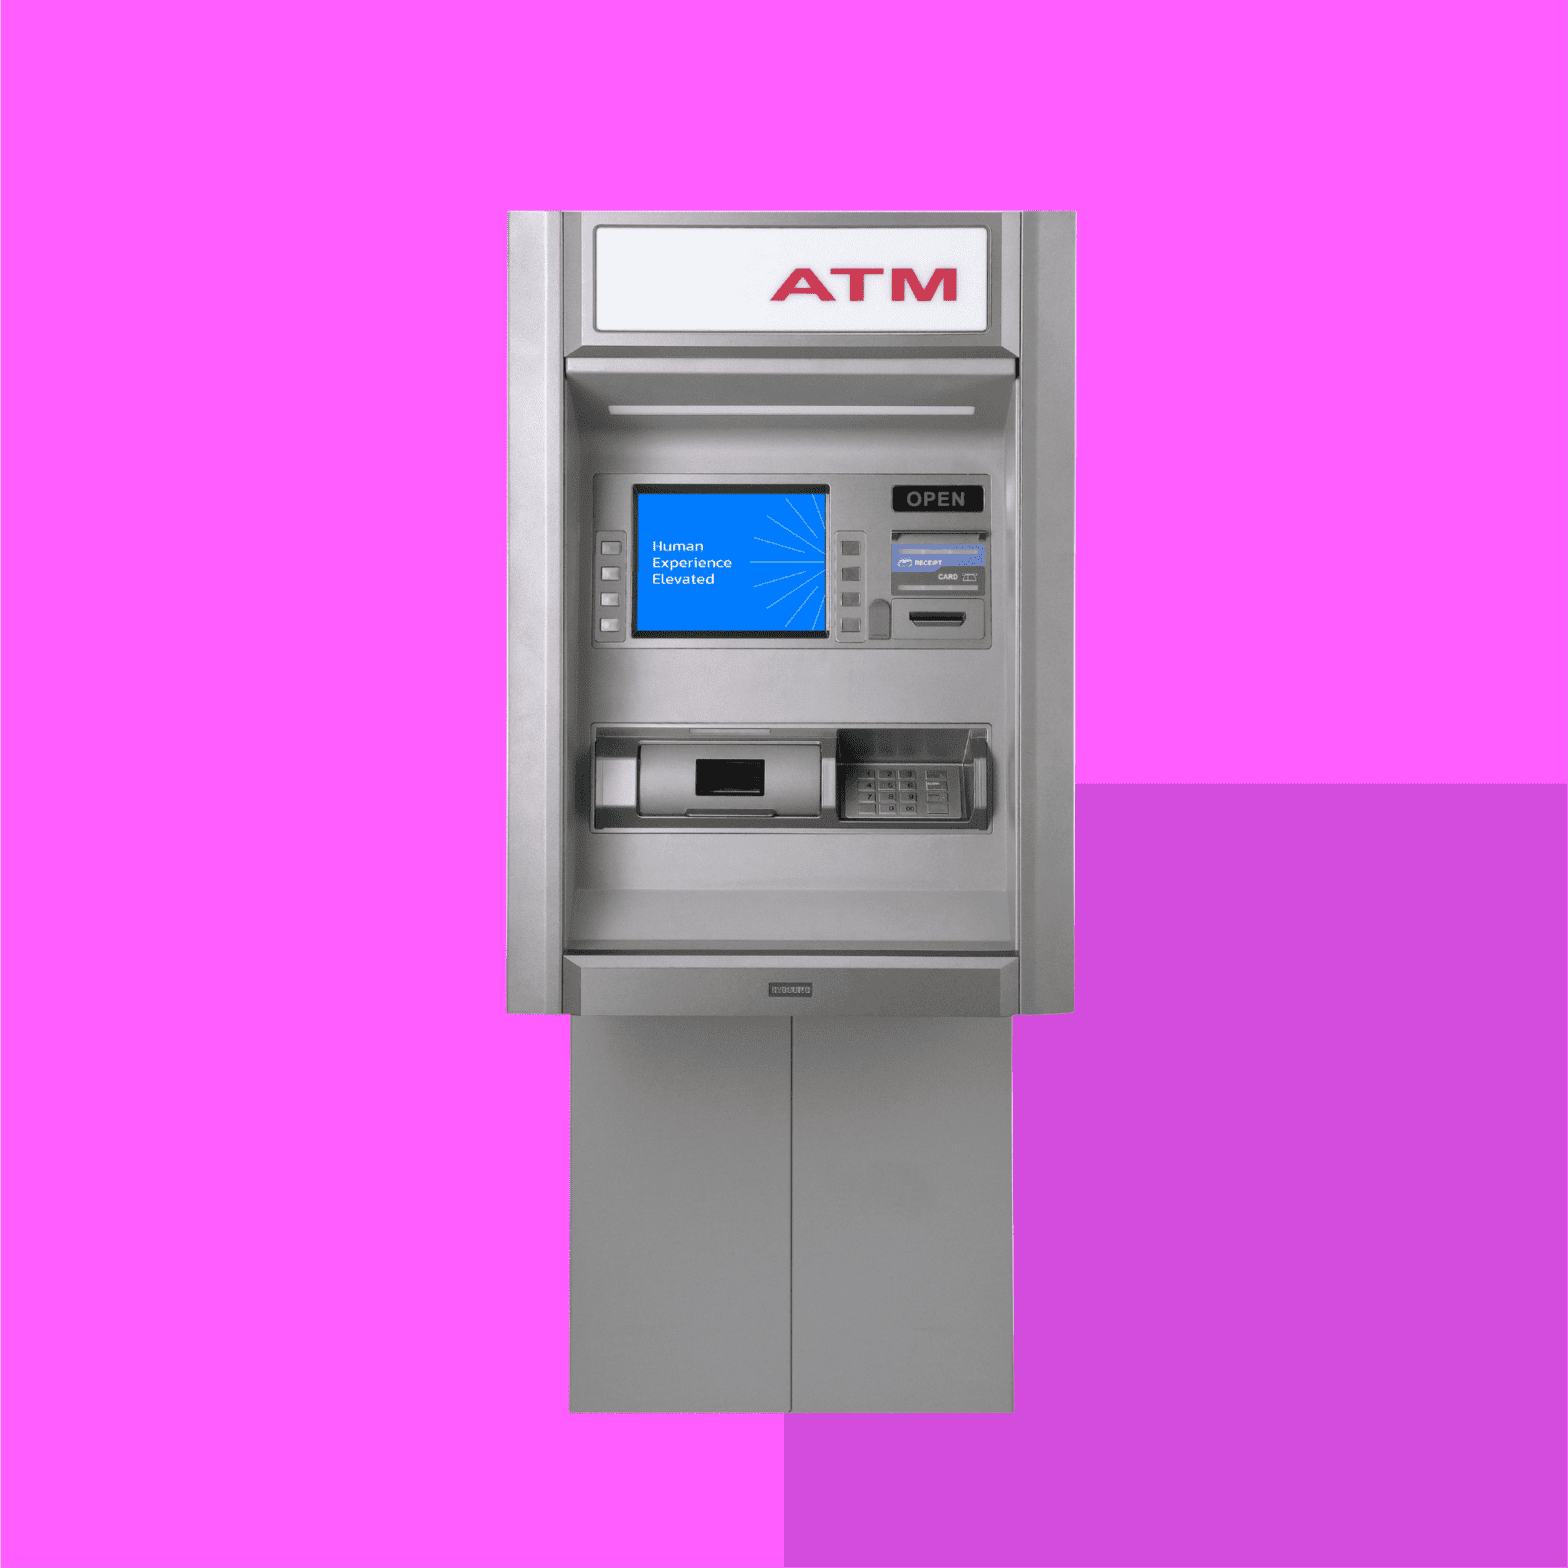 MX5100T, 벽면 통과형 ATM 이미지